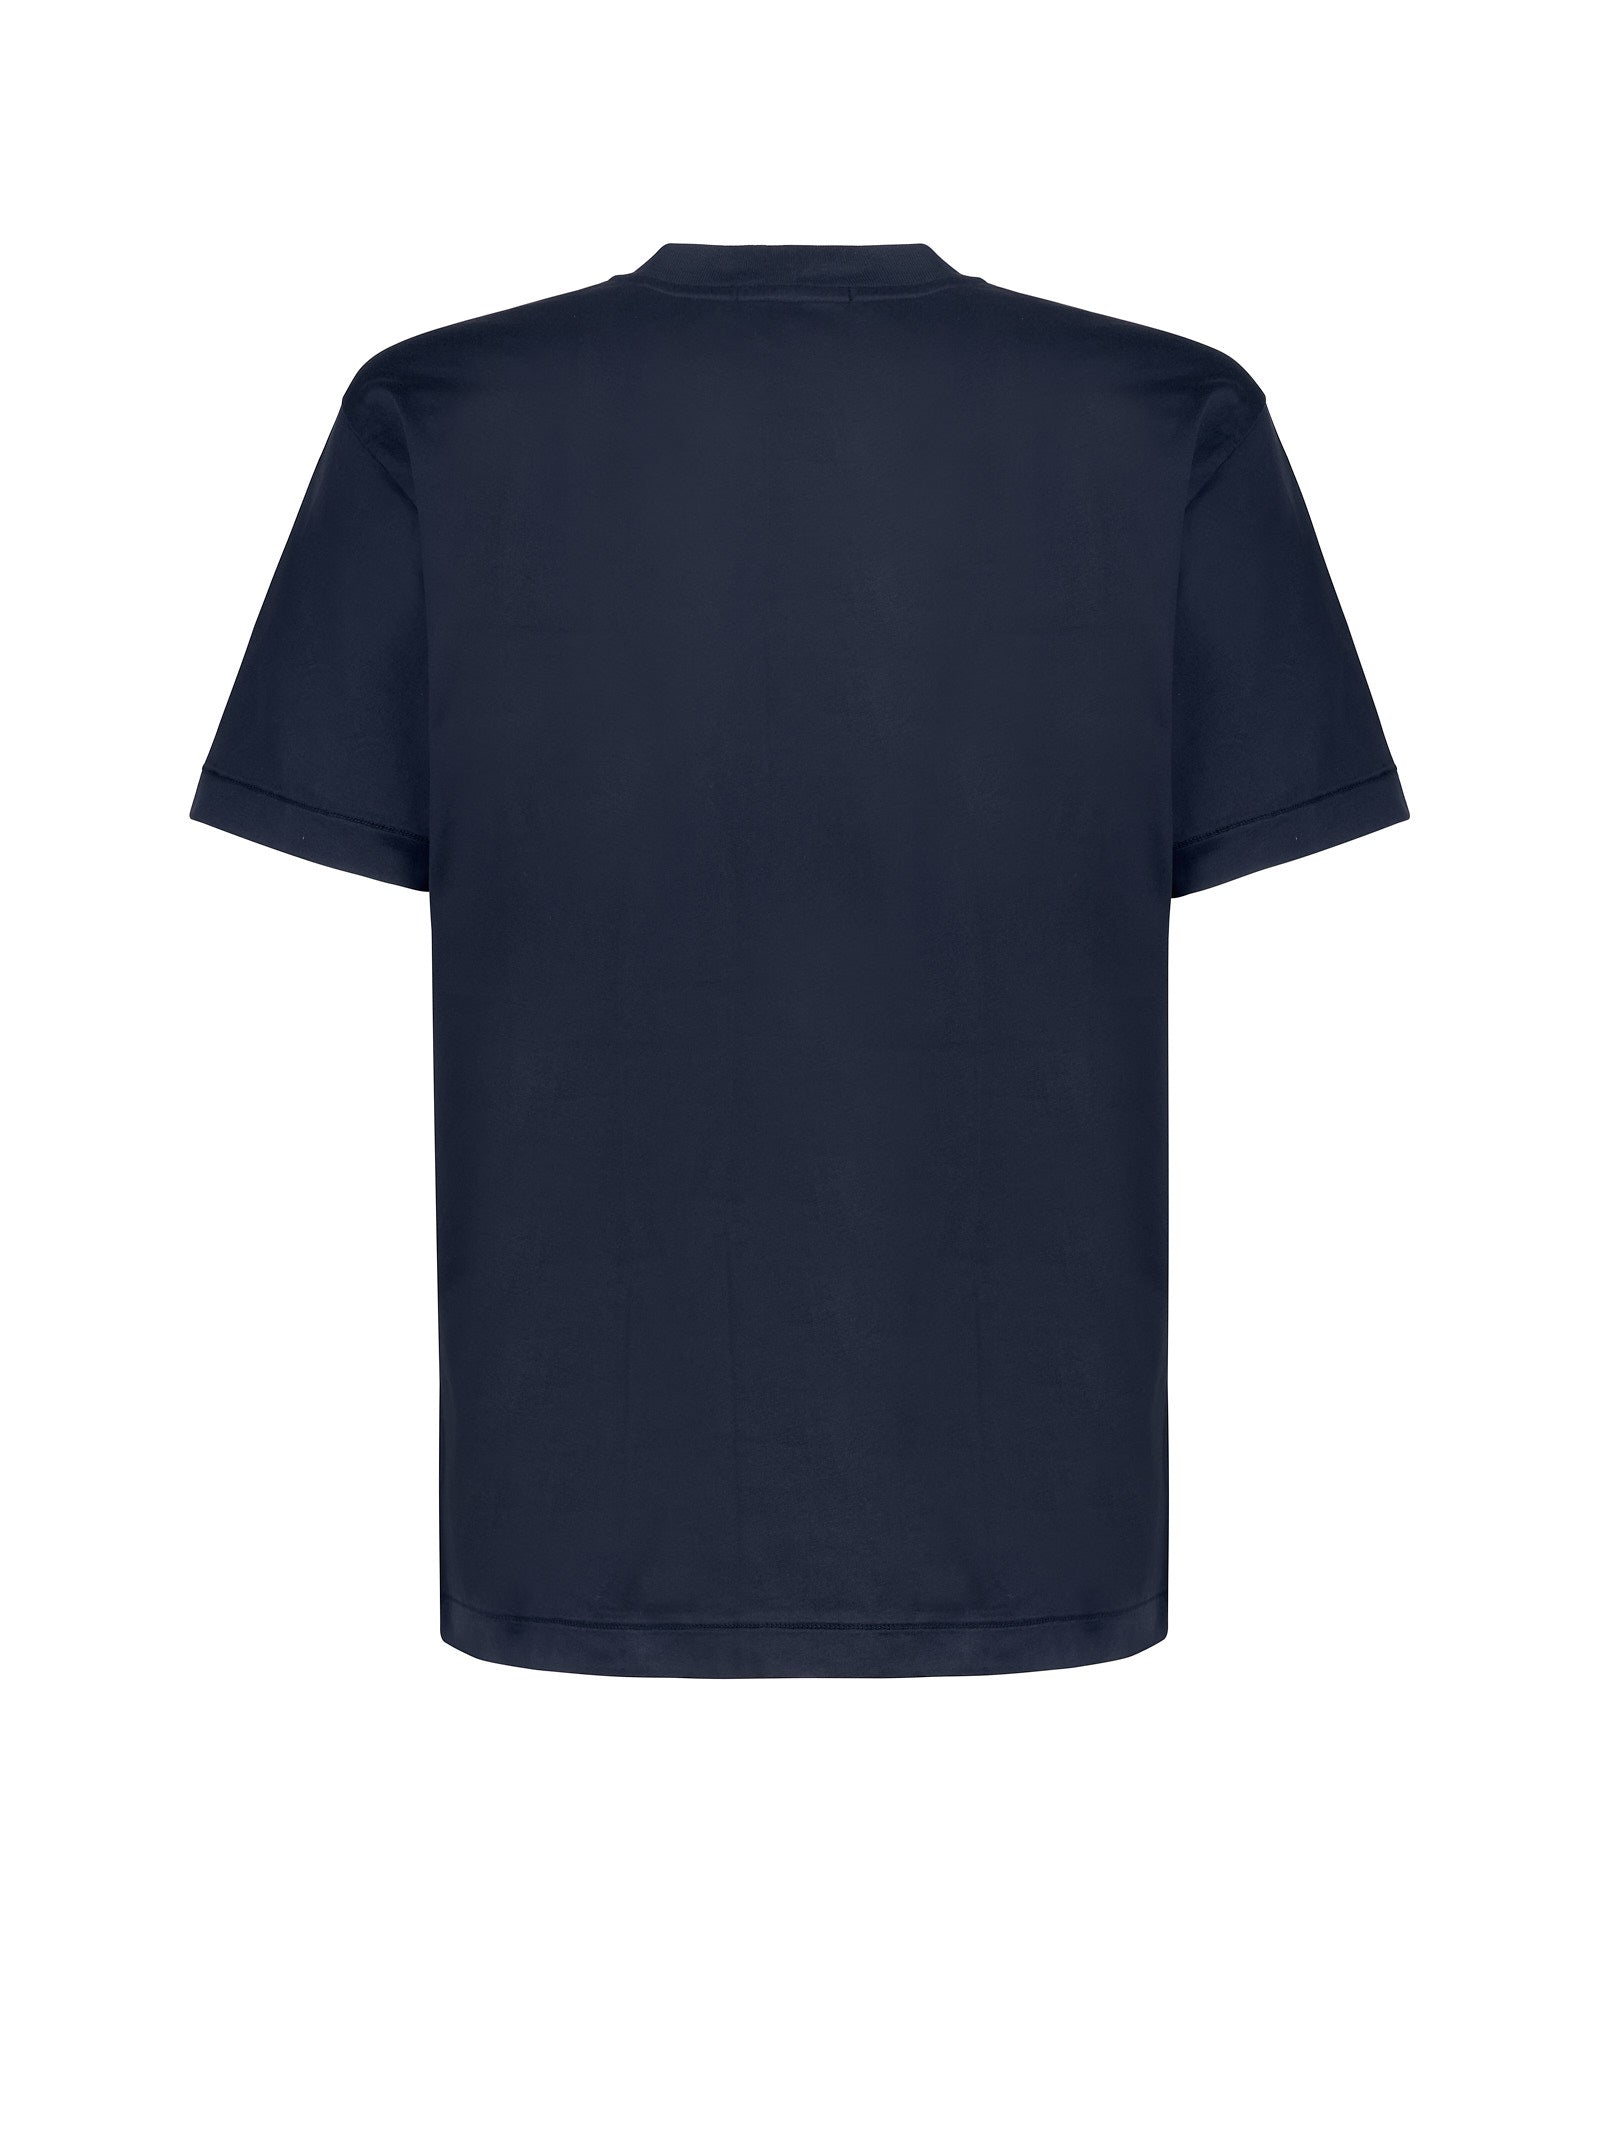 T-shirt STONE ISLAND
Blue